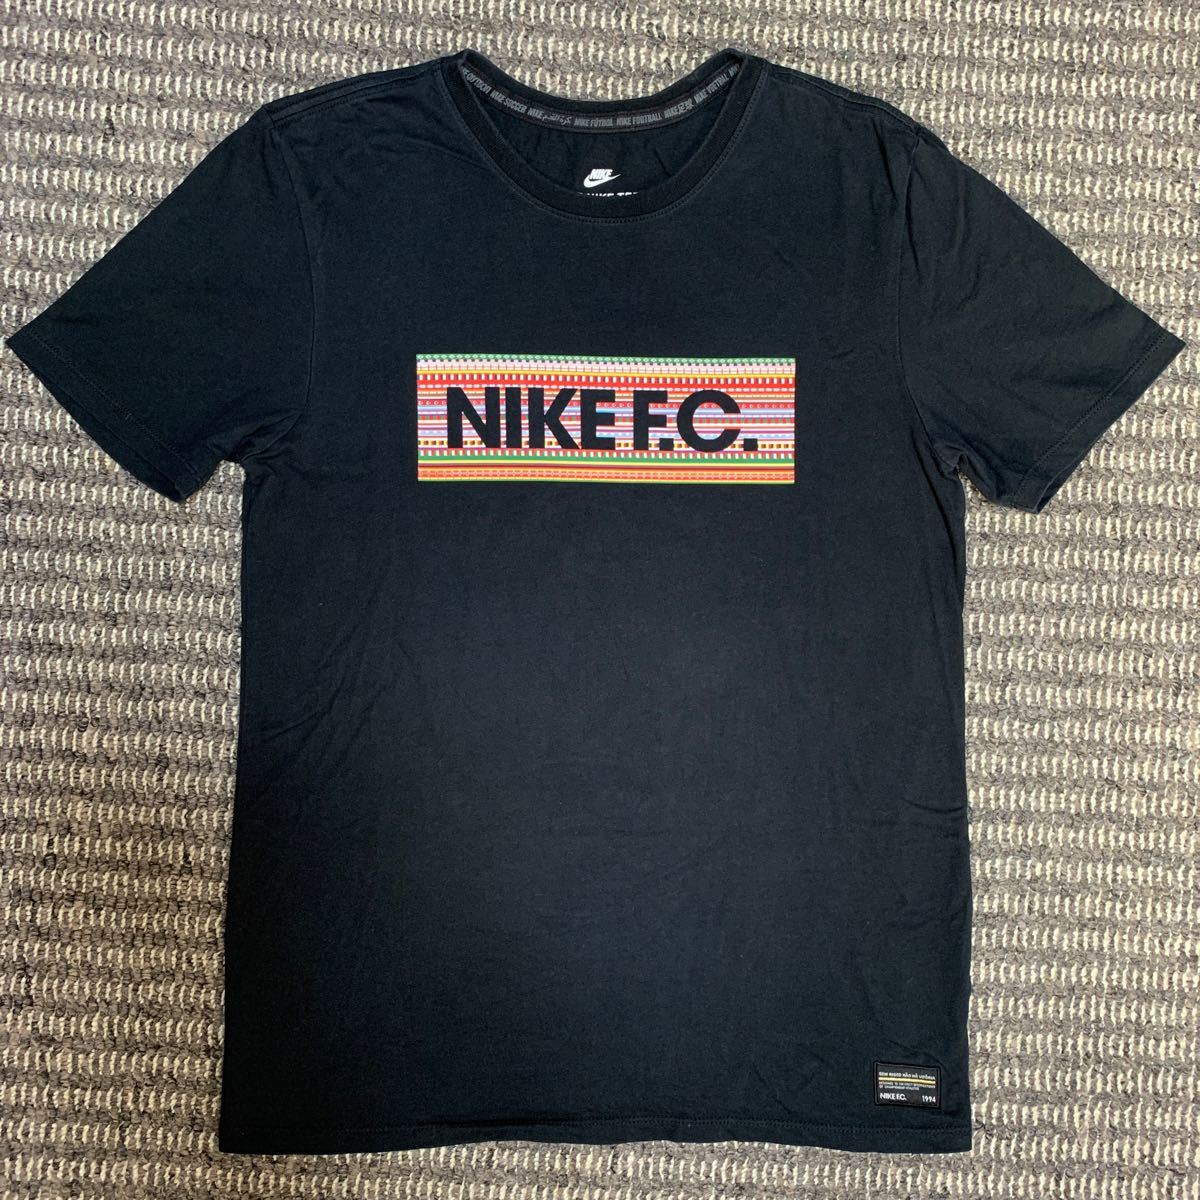 NIKE F.C.  ナイキエフシー 半袖Tシャツ サッカーTシャツ